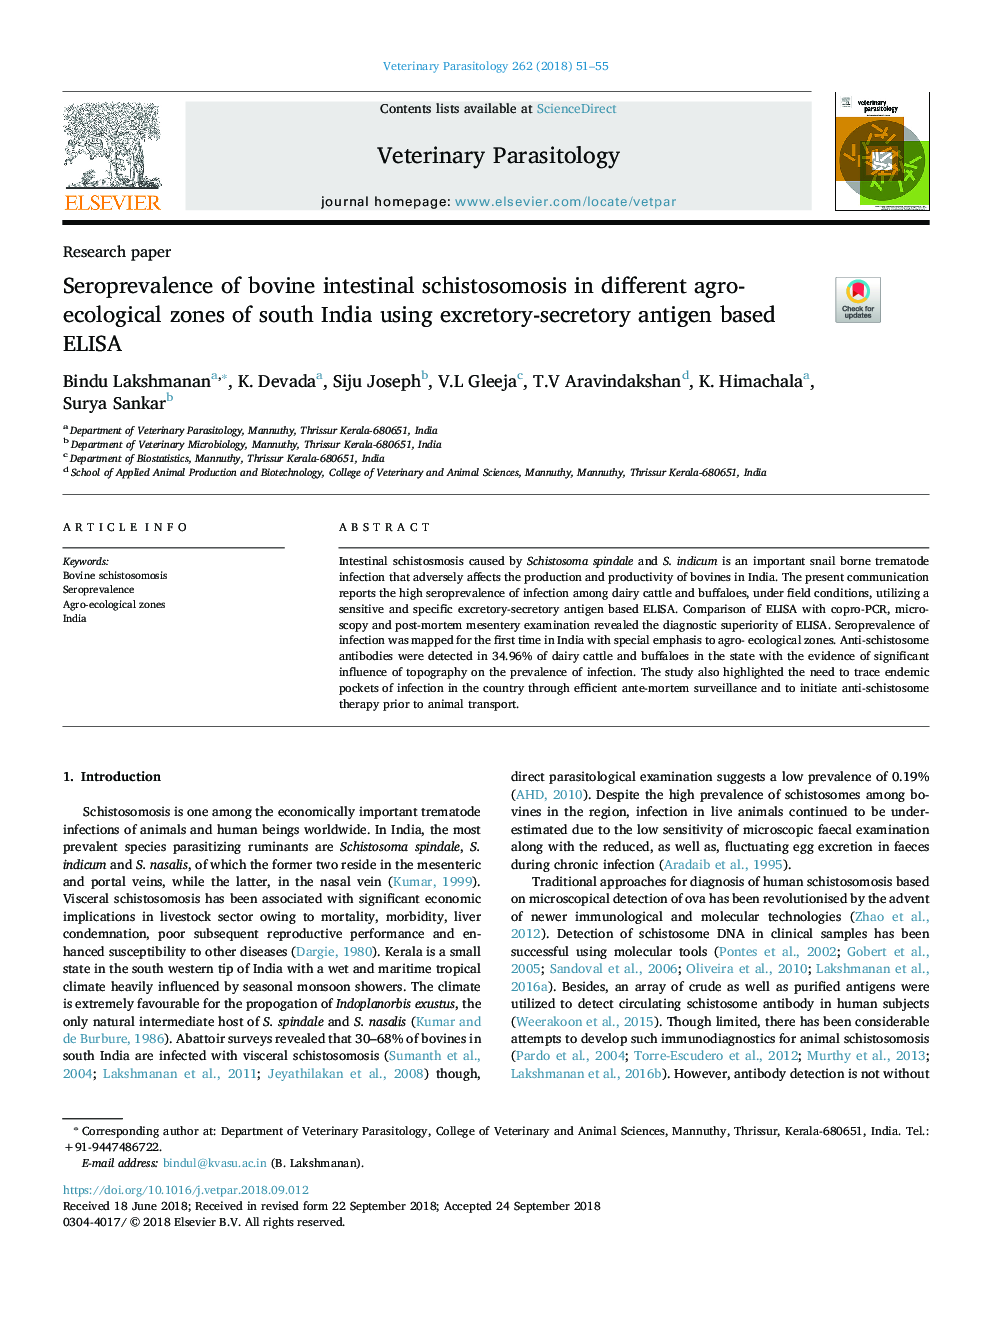 Seroprevalence of bovine intestinal schistosomosis in different agro- ecological zones of south India using excretory-secretory antigen based ELISA